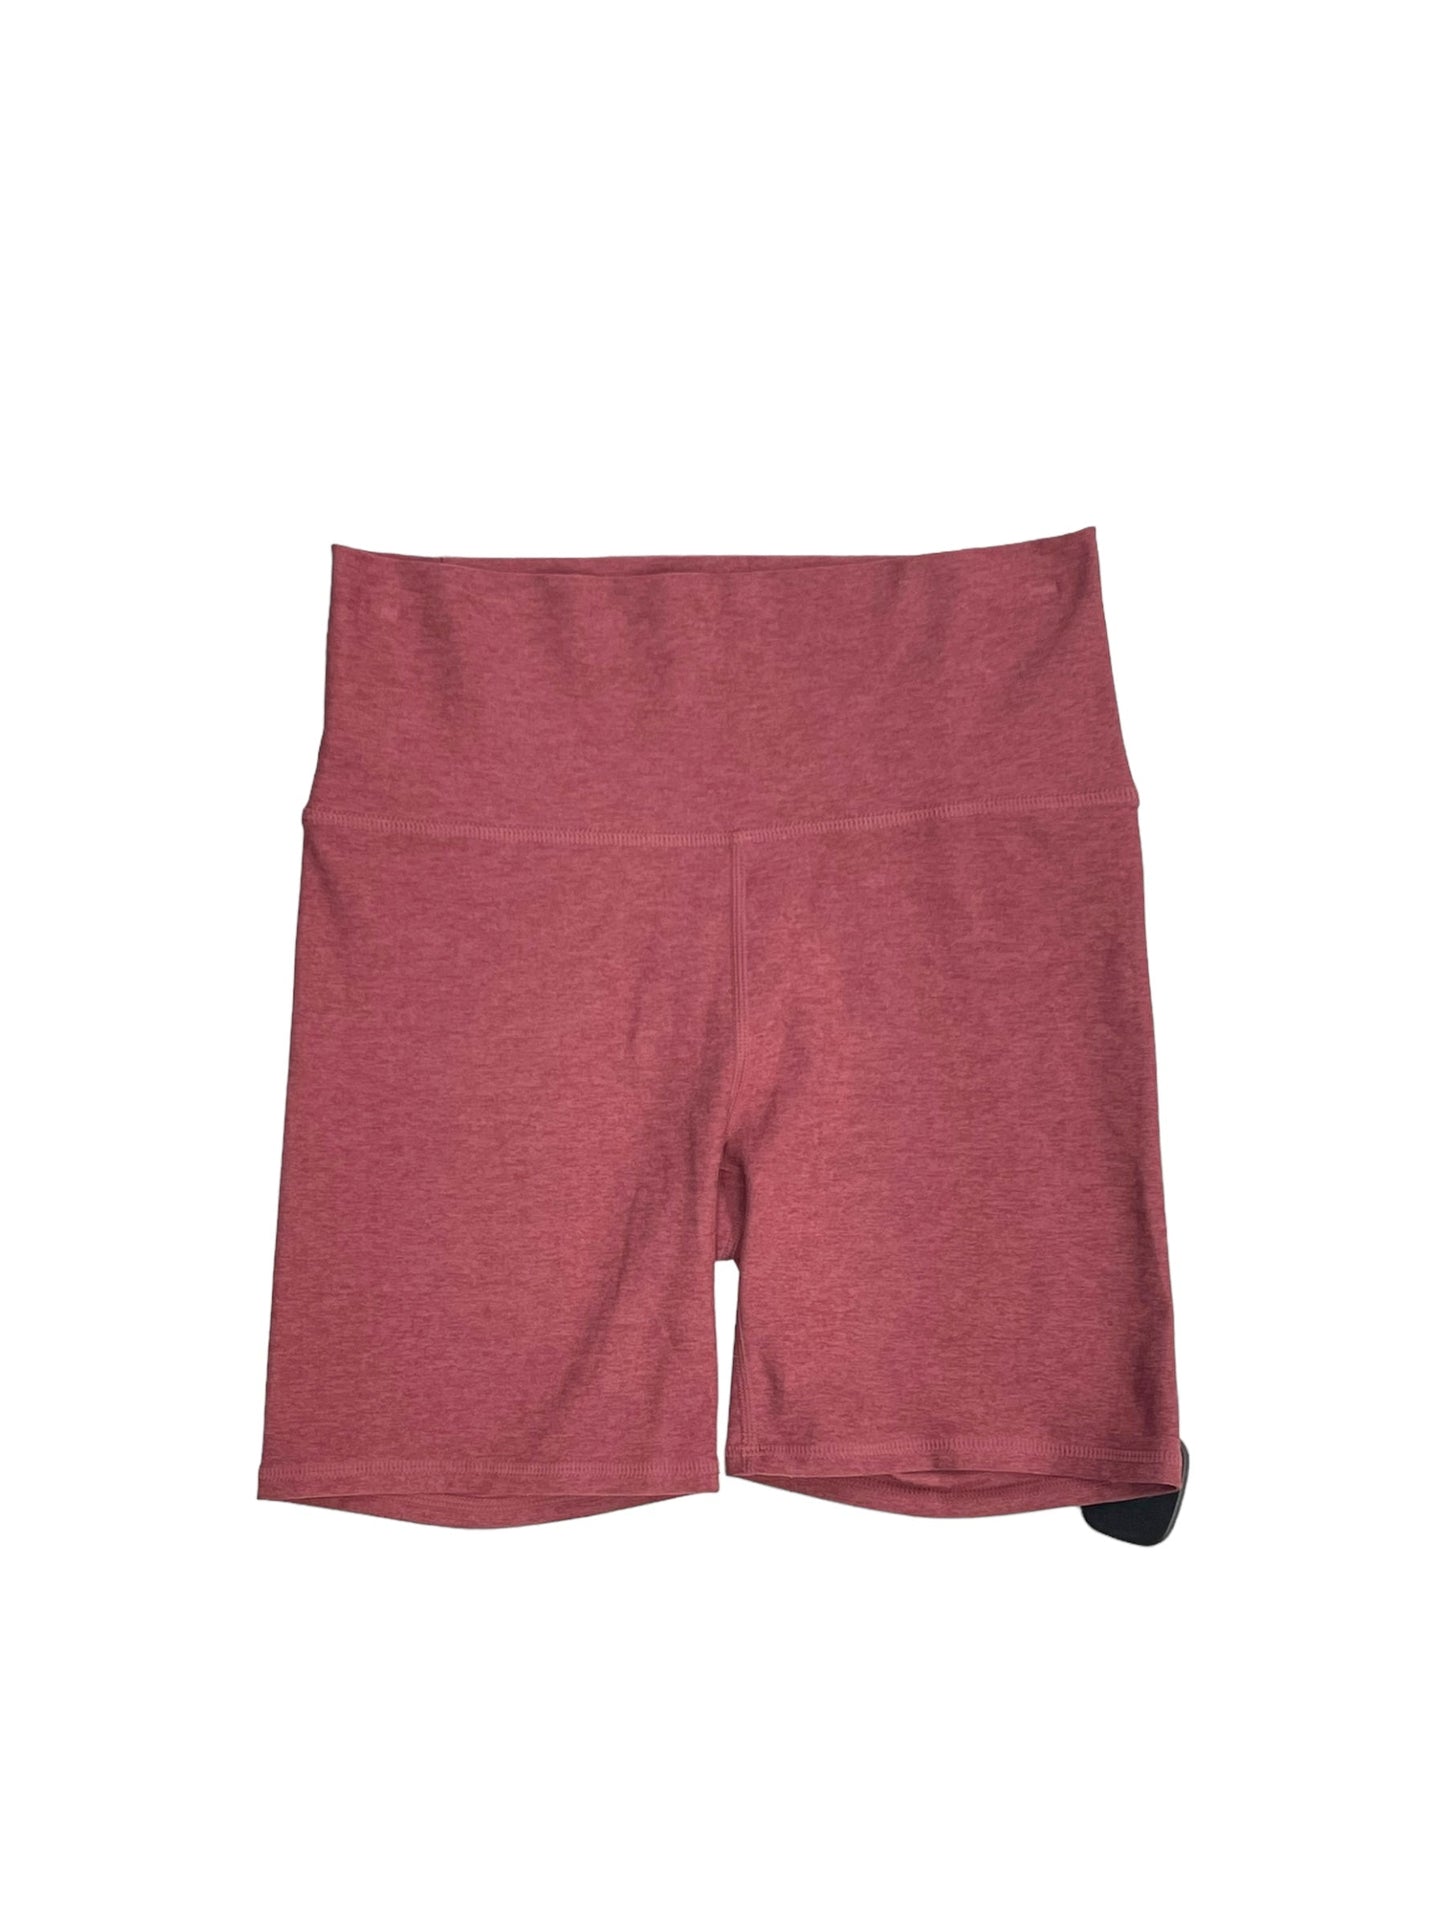 Pink Athletic Shorts Vuori, Size S